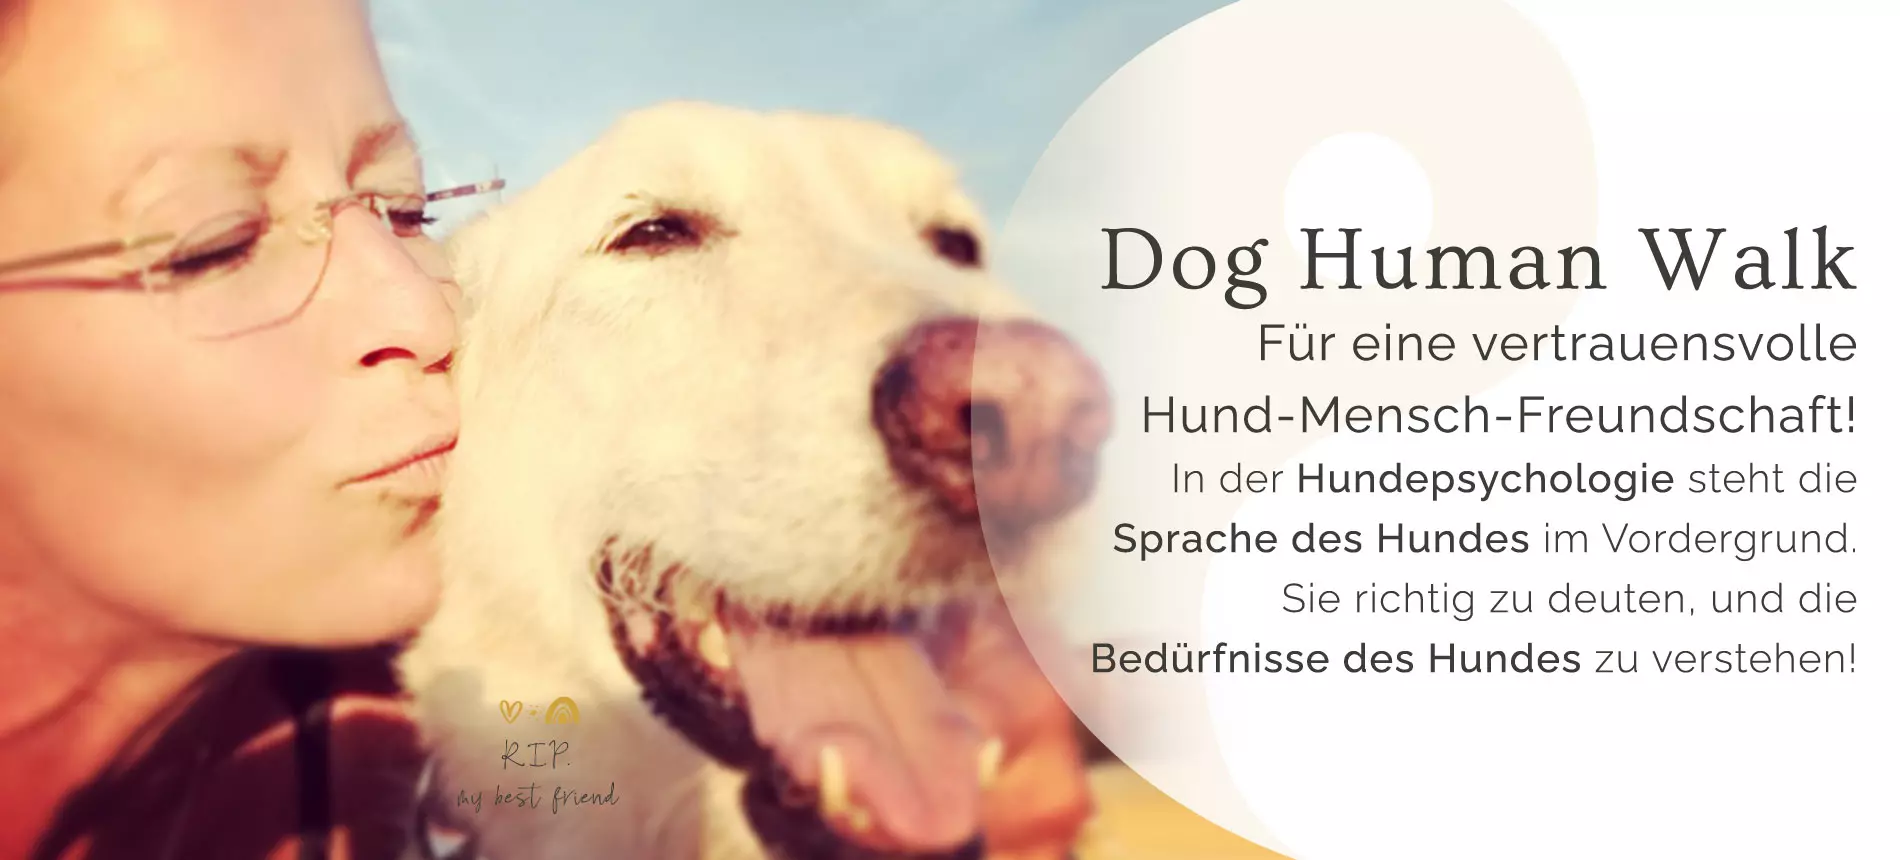 Dog Human Walk Hundeschule Hundepsychologe Hundetraining Bitburg Trier Wittlich Tatjana Schröder